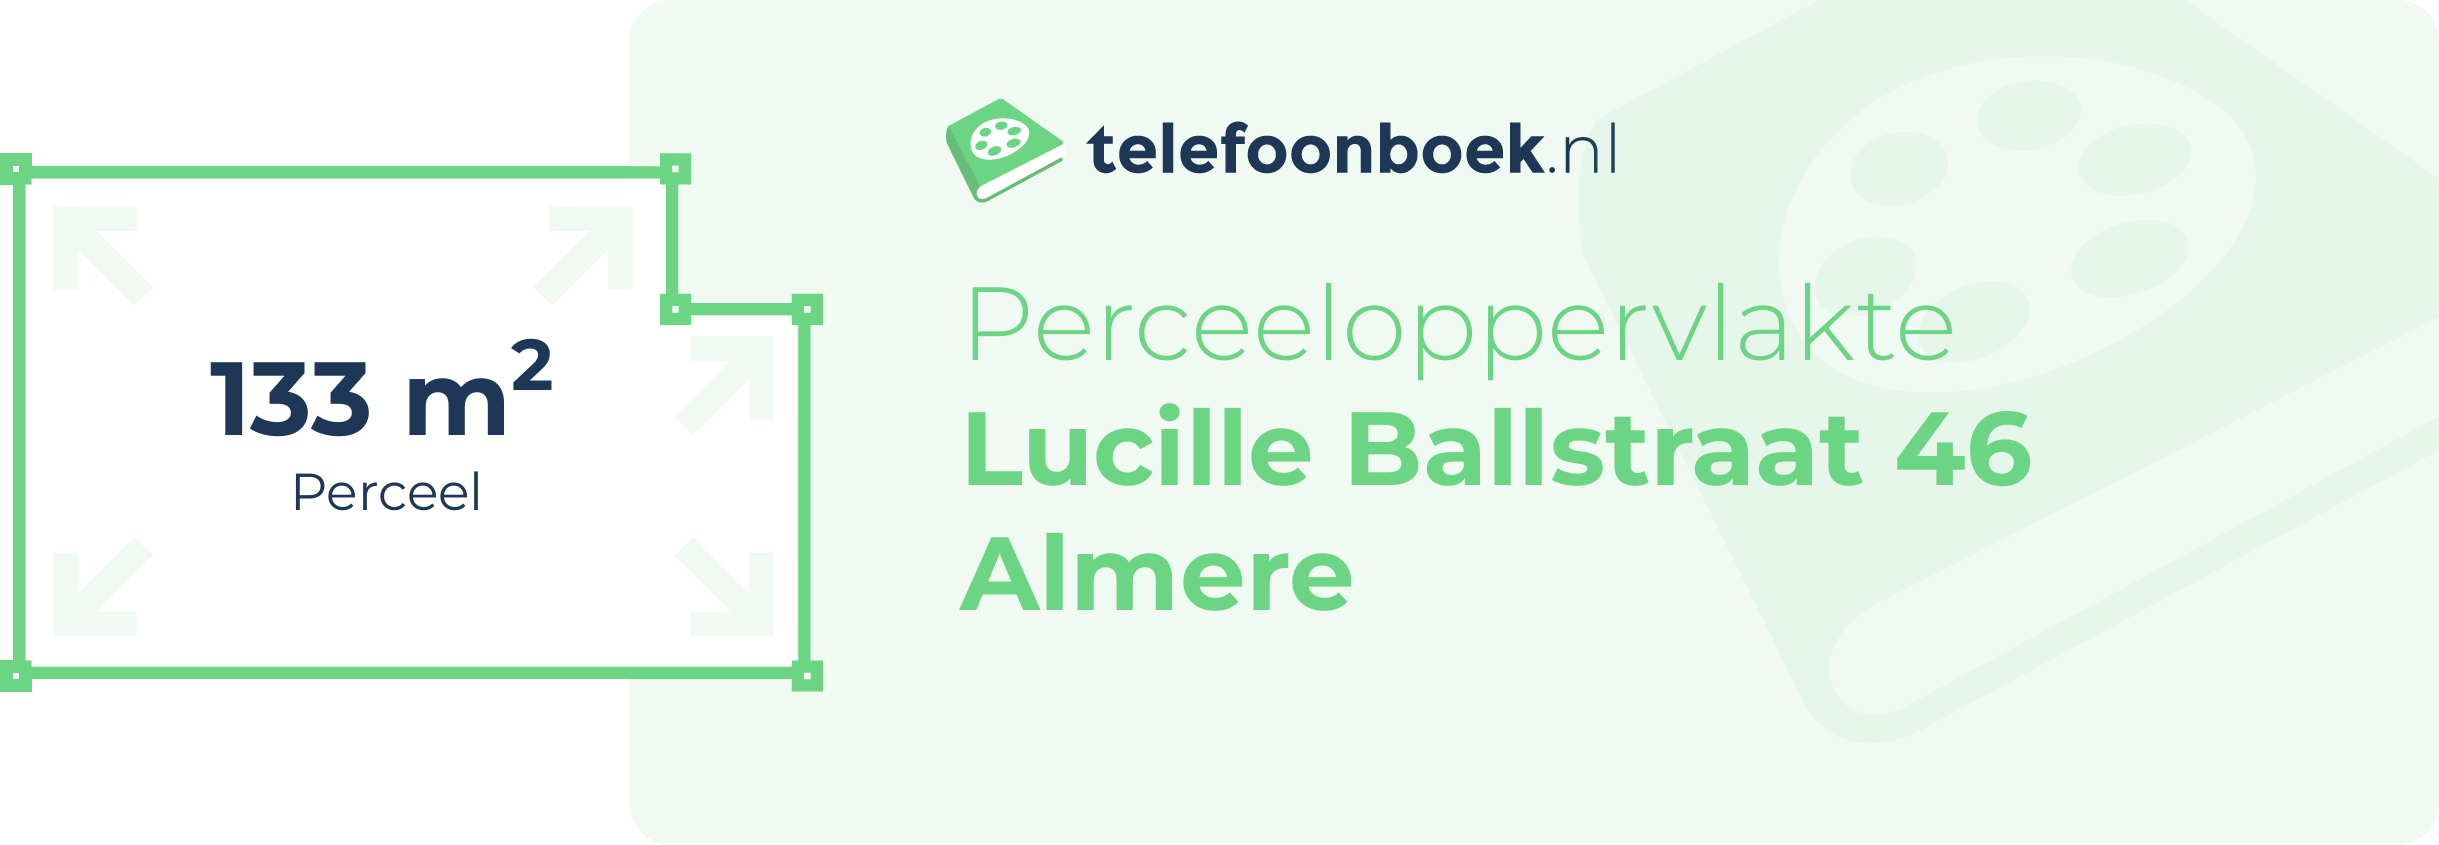 Perceeloppervlakte Lucille Ballstraat 46 Almere